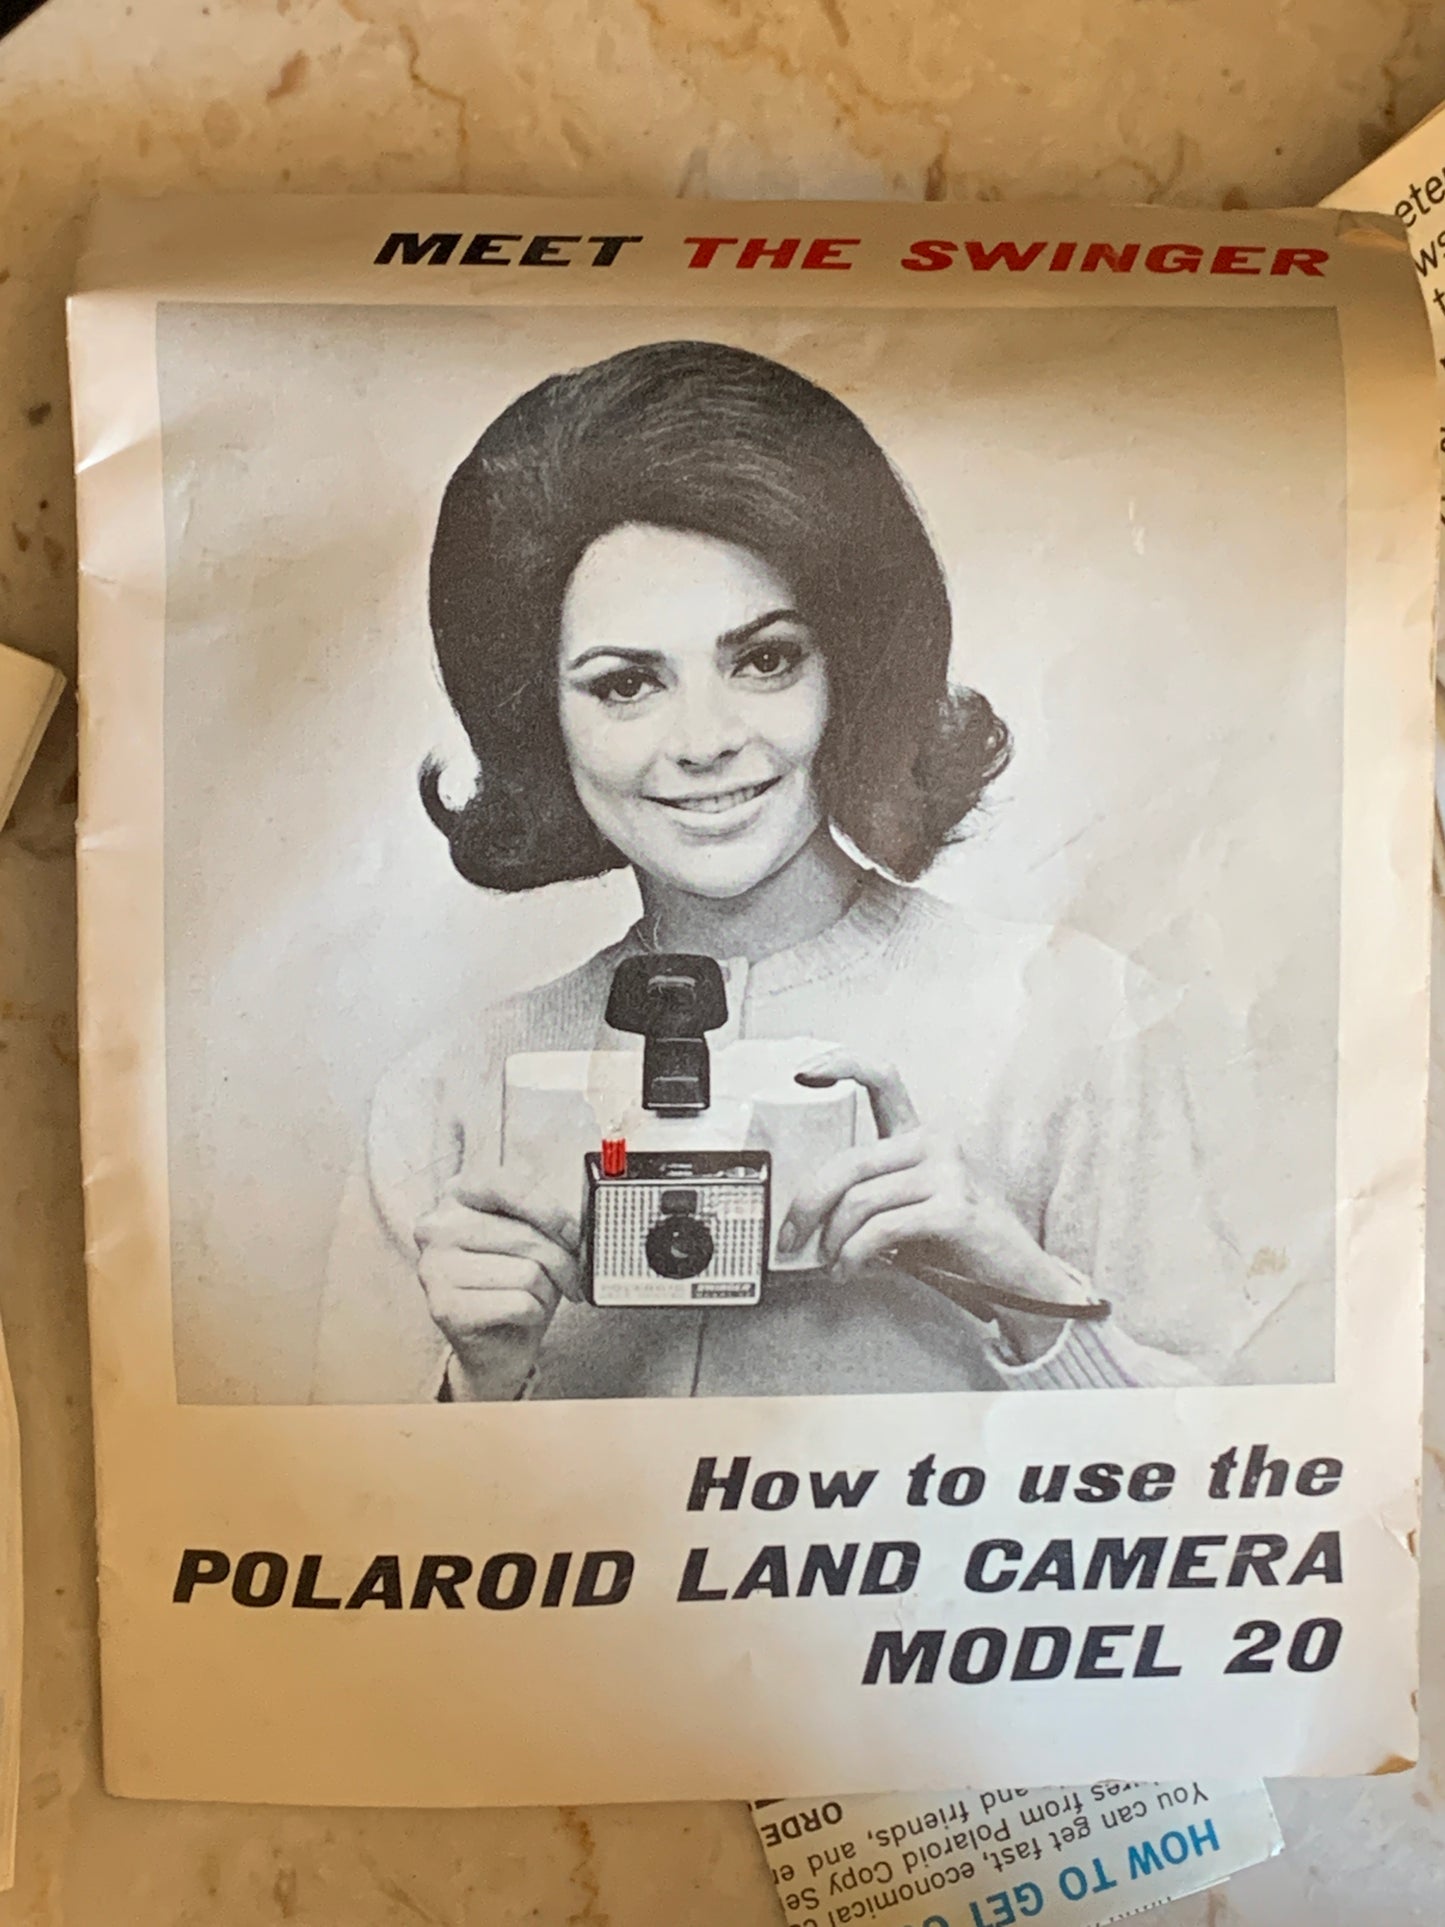 Polaroid Swinger Vintage Polaroid Camera with Original Box - Untested